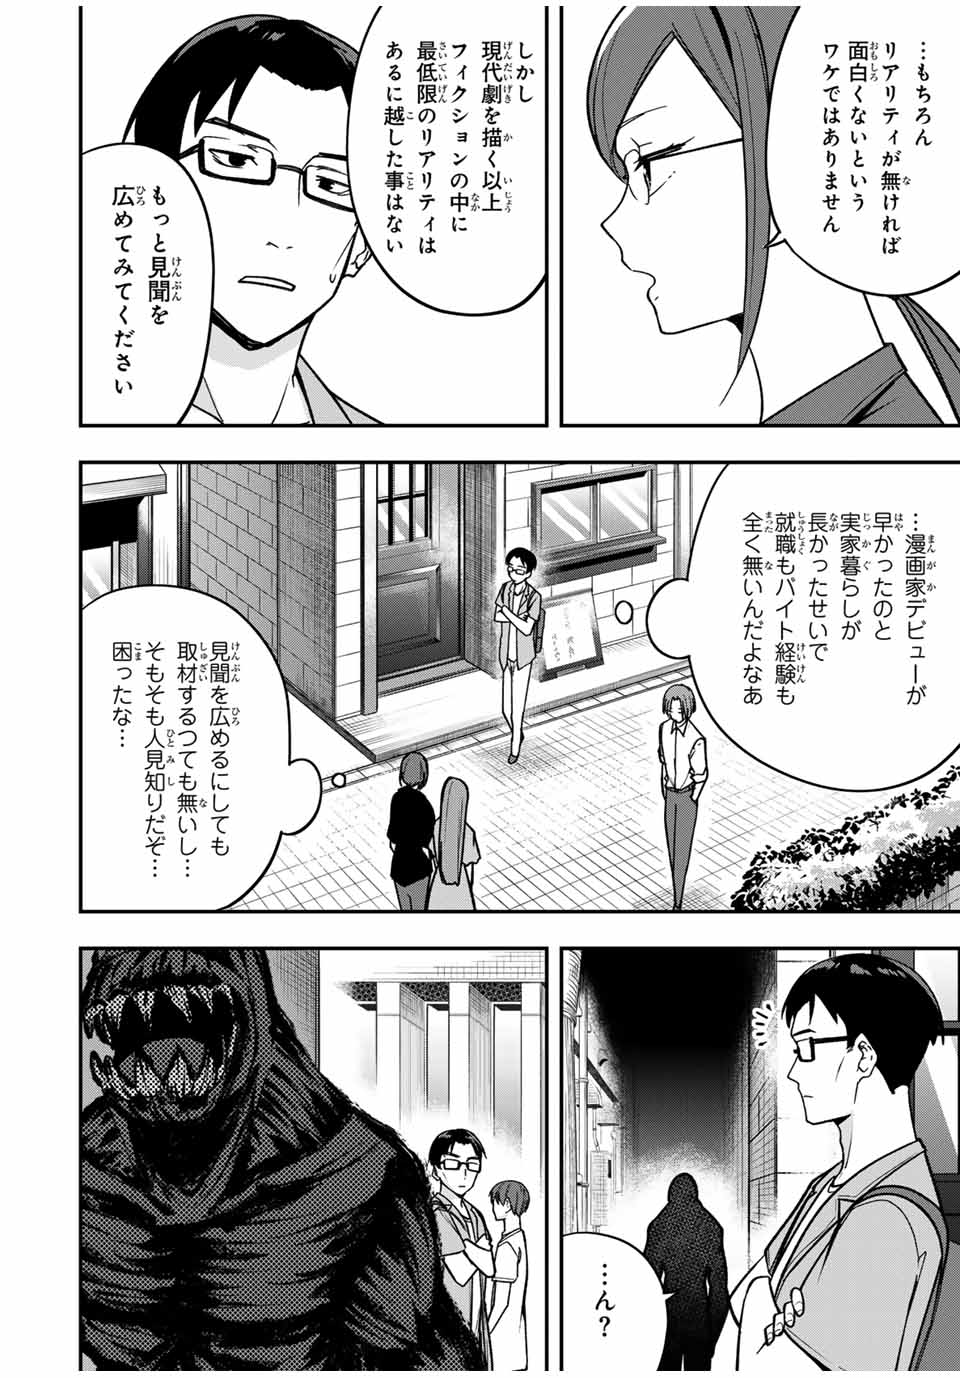 Heroine wa xx Okasegitai - Chapter 11 - Page 6